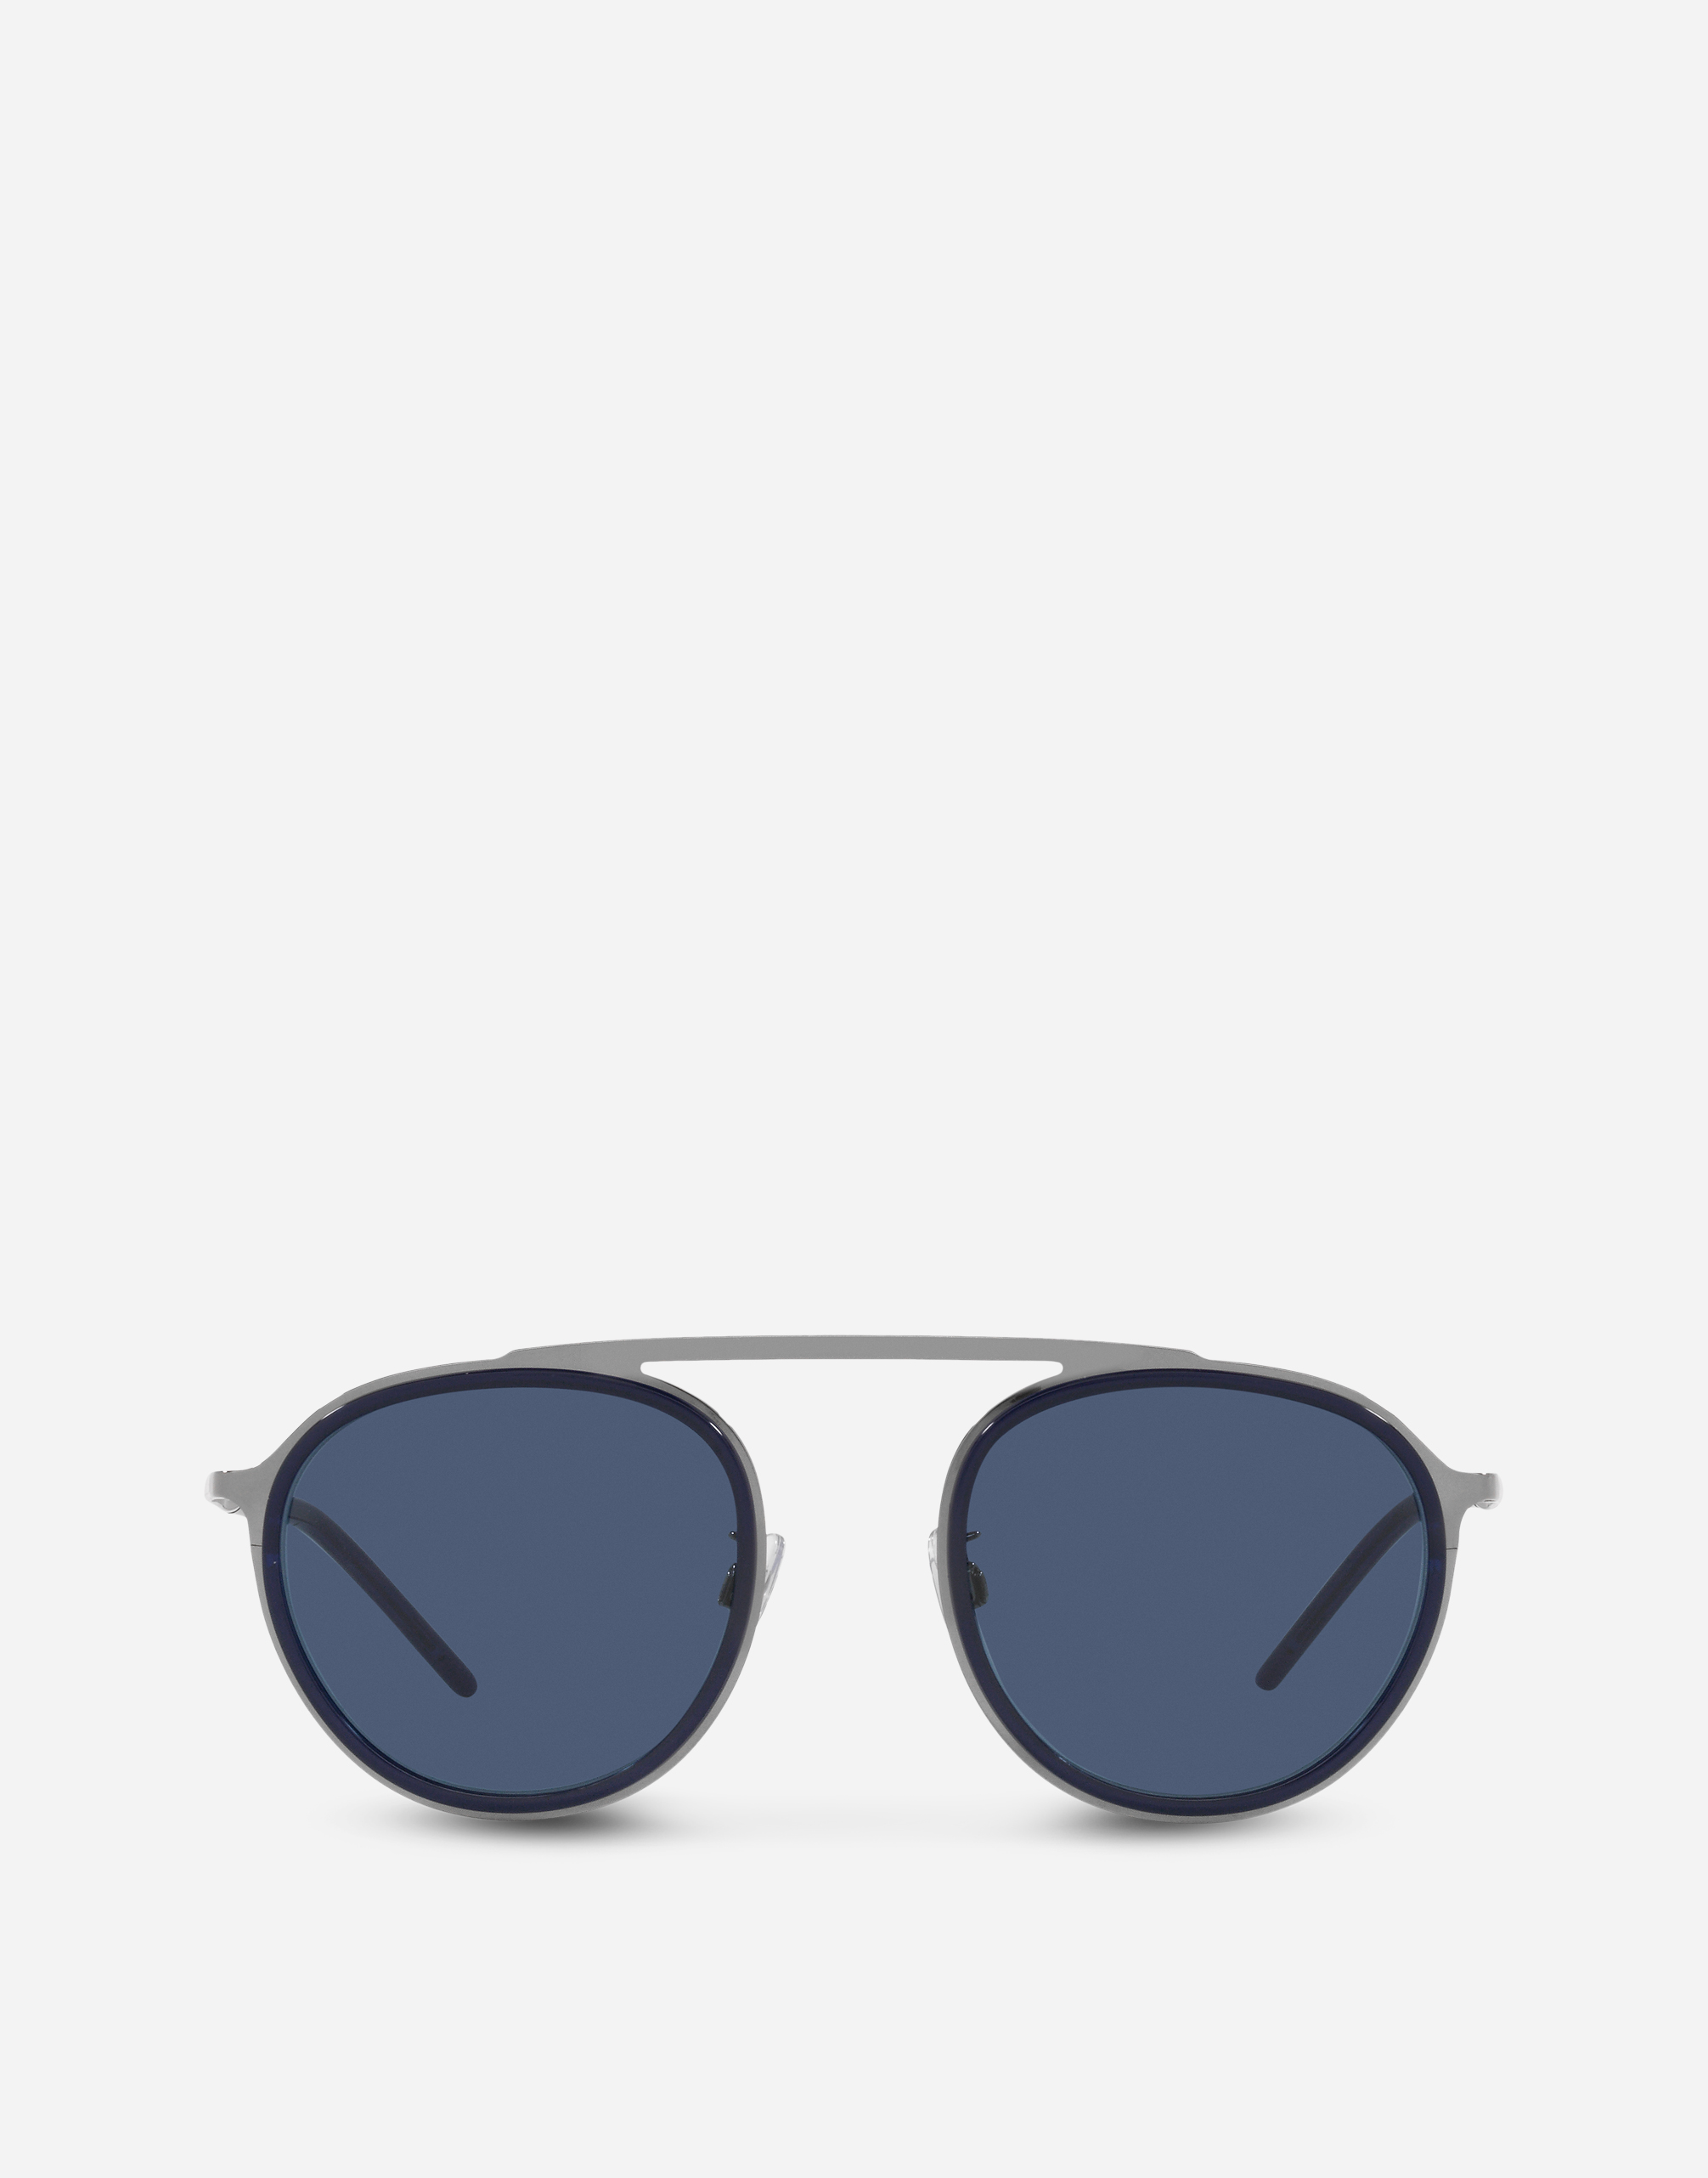 Madison sunglasses in Gun and blue transparent